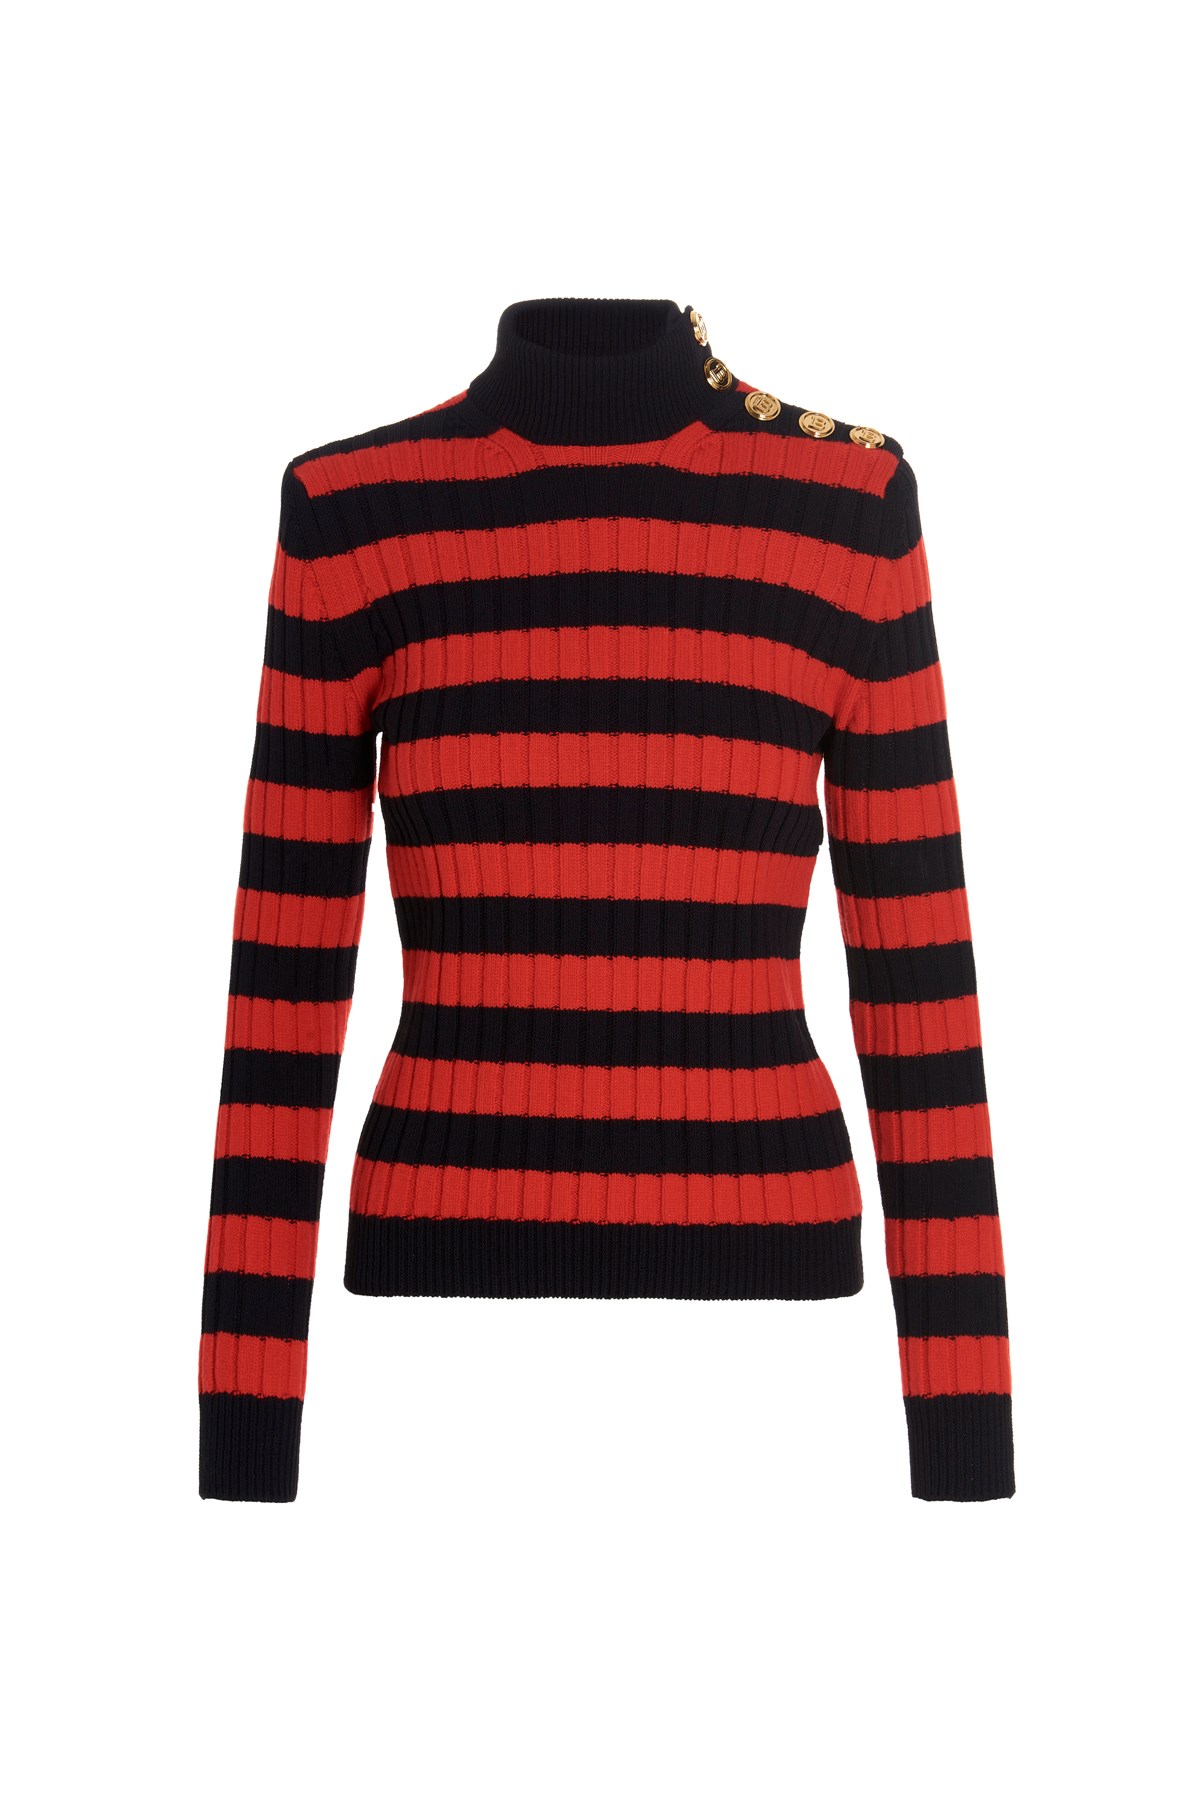 BALMAIN Striped Sweater